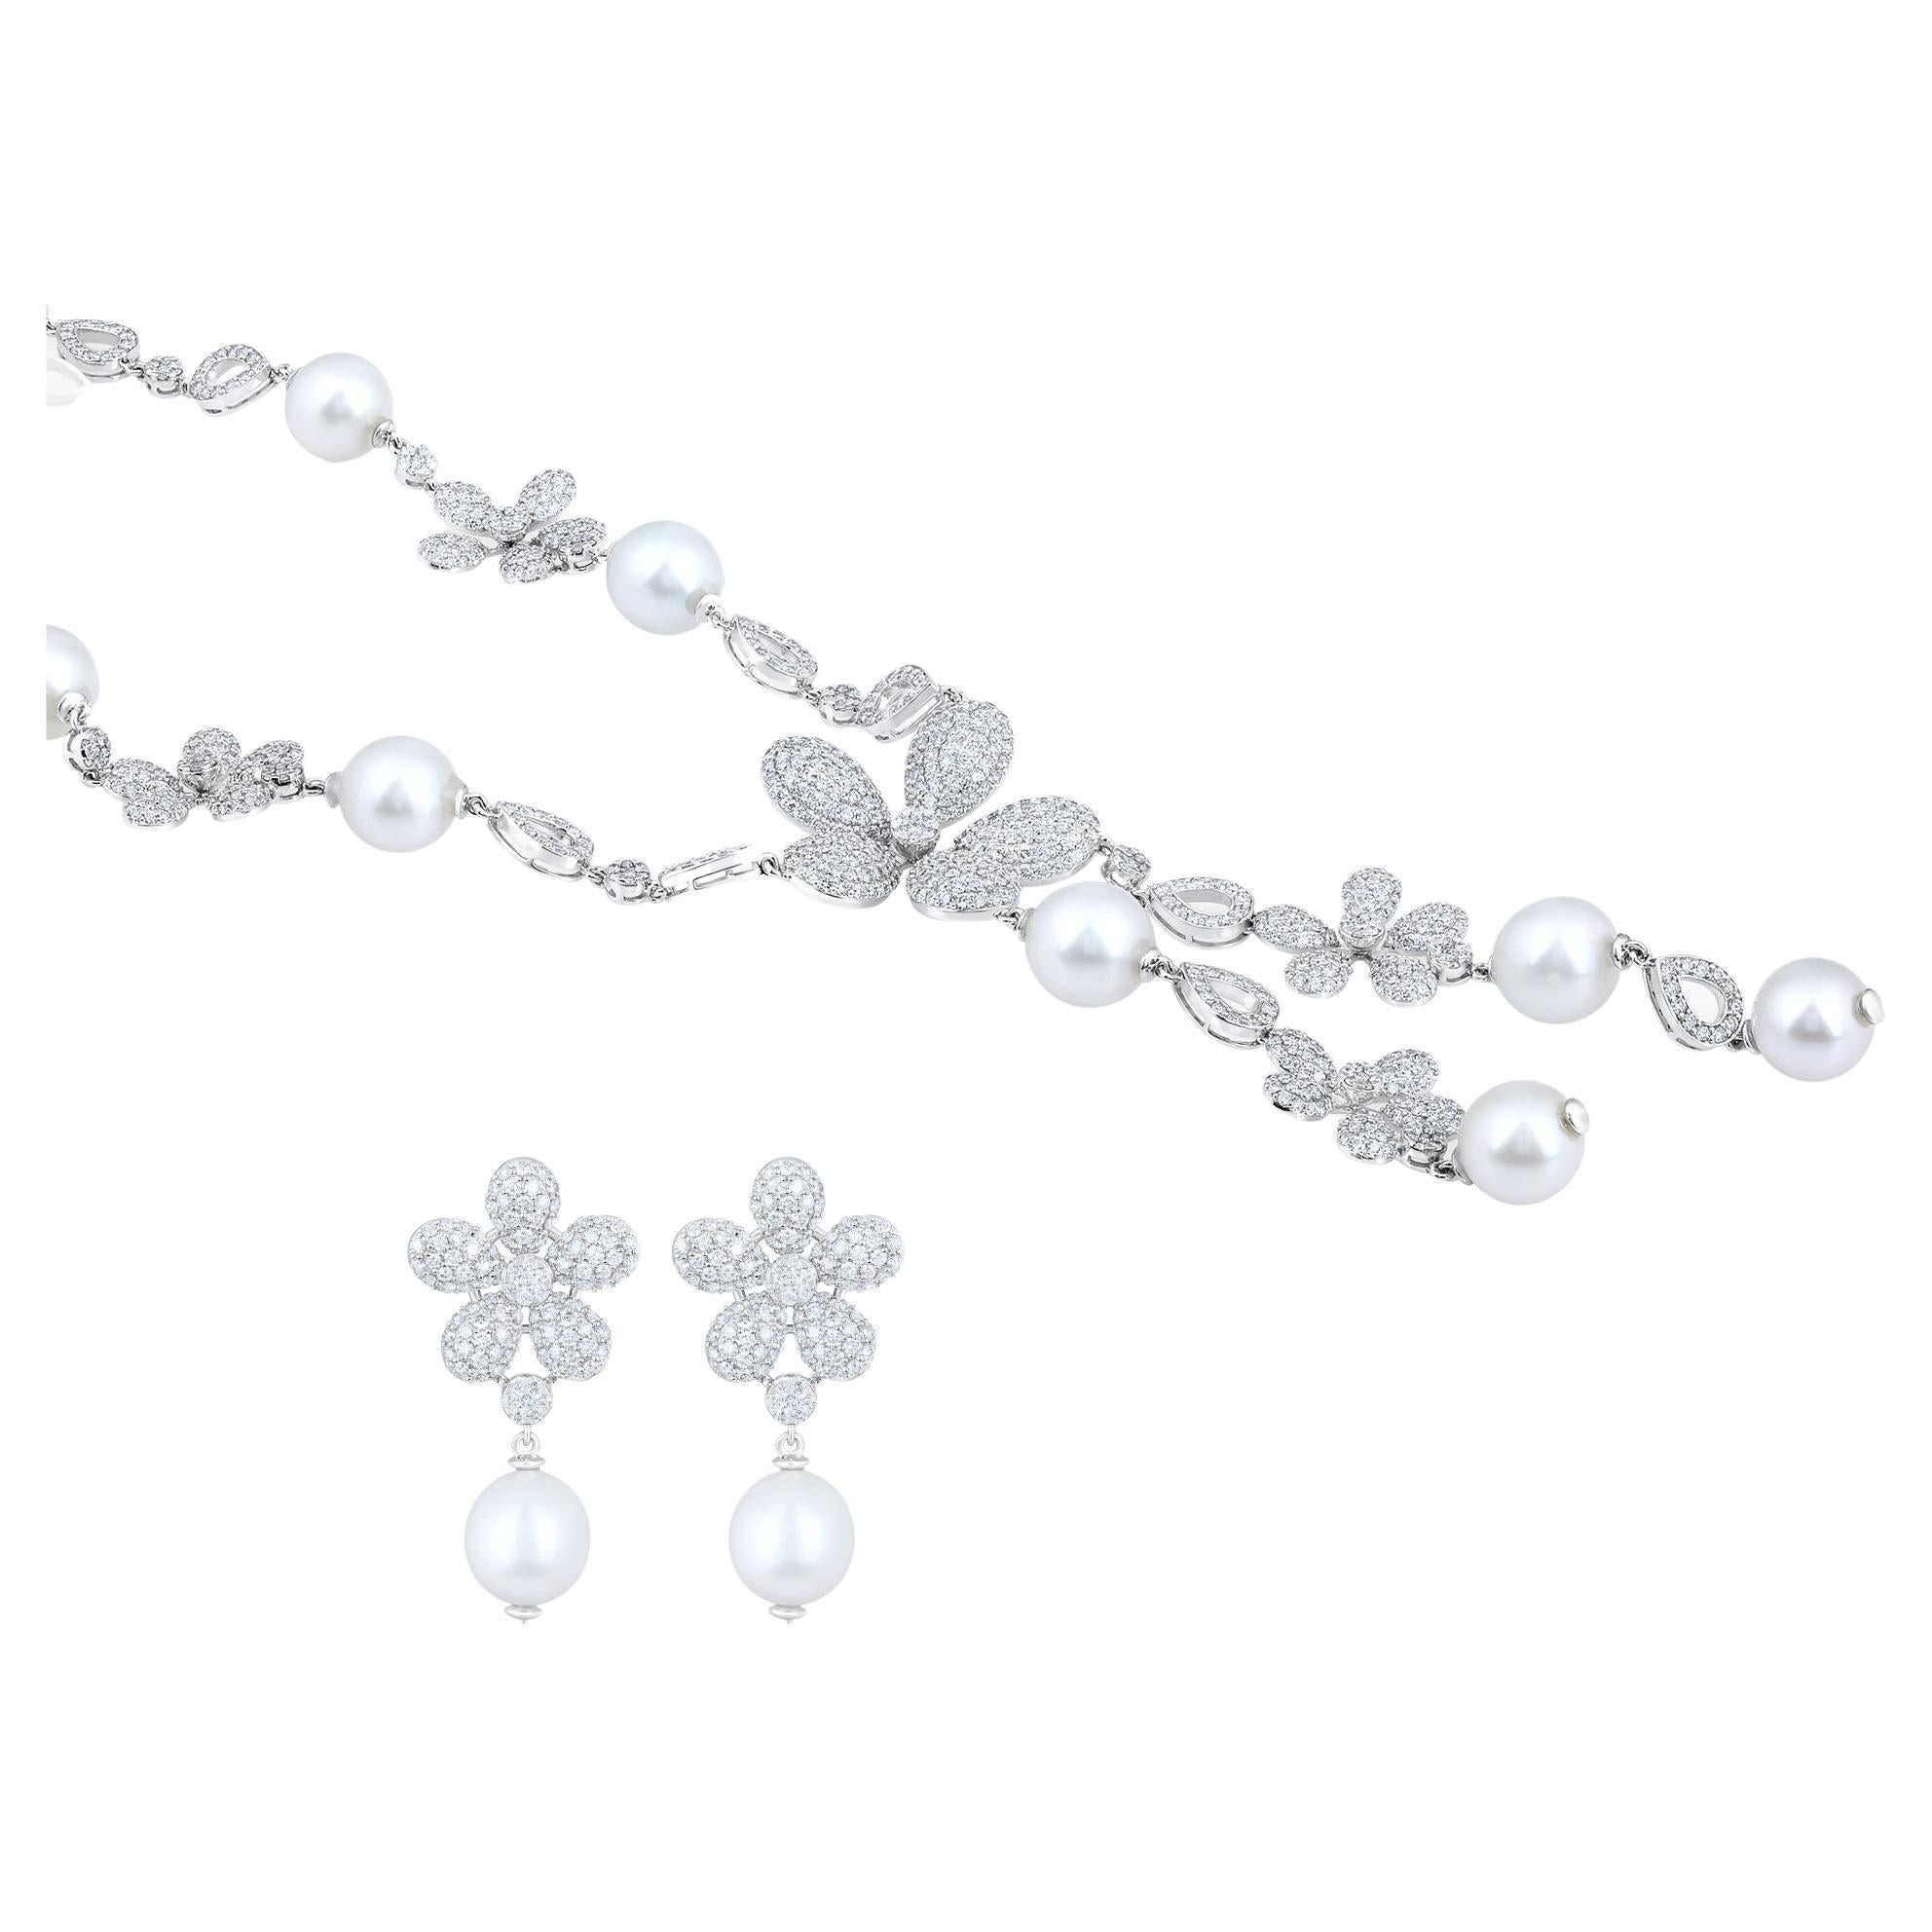 Designer 17.4ct Natural Diamond w/ Pearl 10K Gold Wedding Necklace Earrings Set